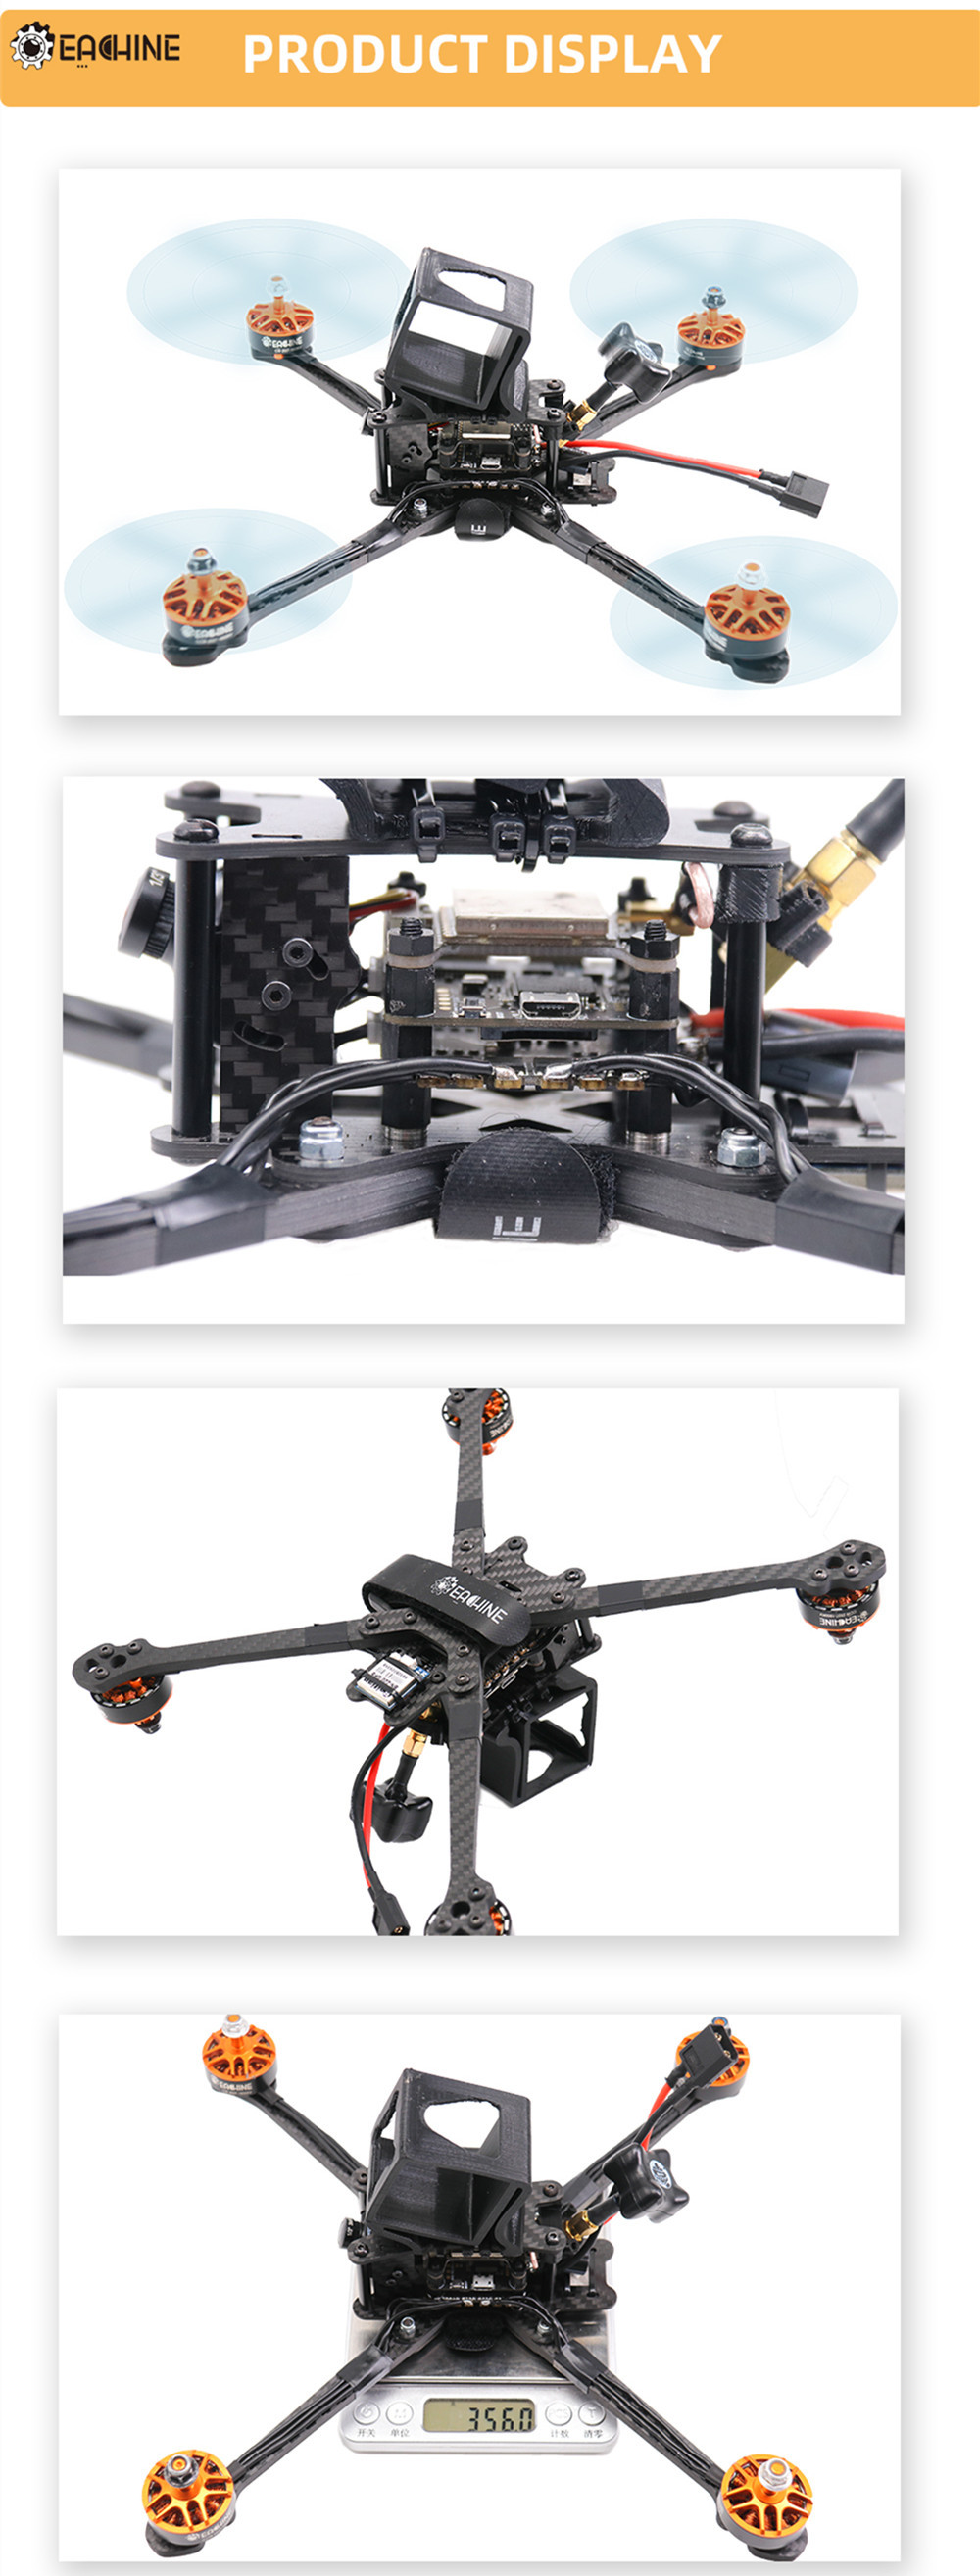 Eachine-Tyro129-280mm-F4-OSD-DIY-7-Inch-FPV-Racing-Drone-PNP-w-GPS-Runcam-Nano-2-FPV-Camera-1525150-3